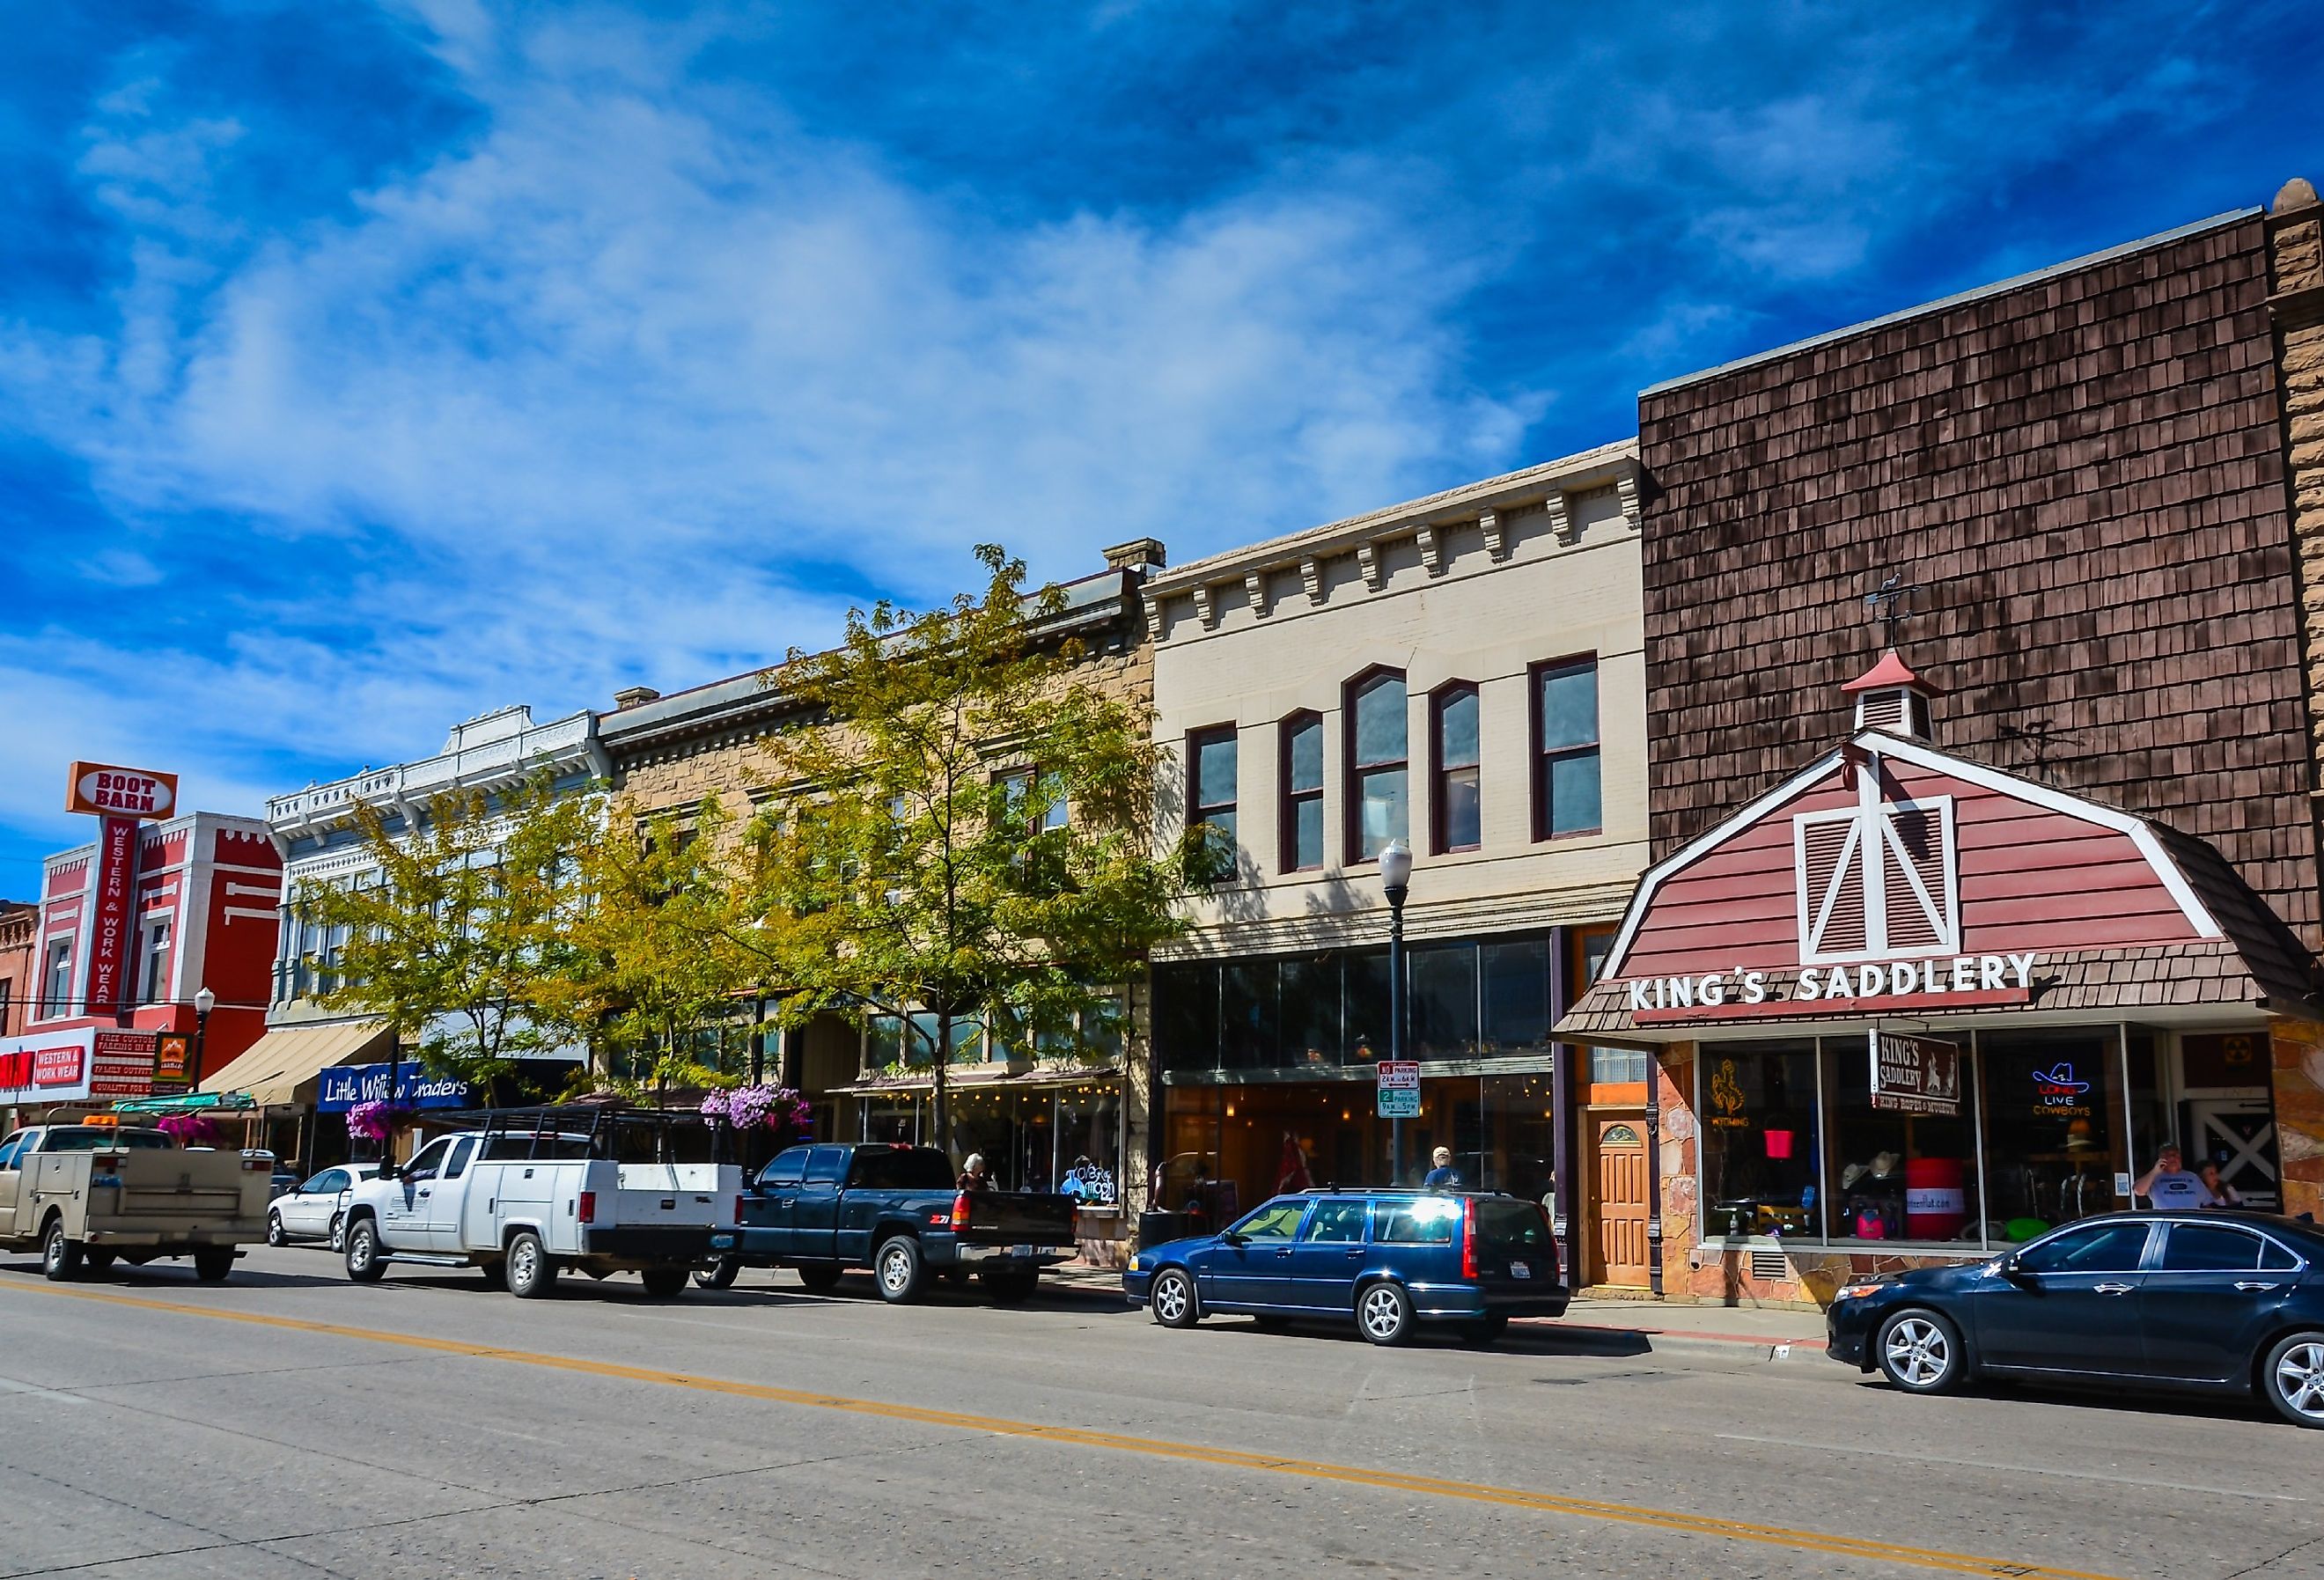 Downtown street in Sheridan, Wyoming. Image credit Sandra Foyt via Shutterstock